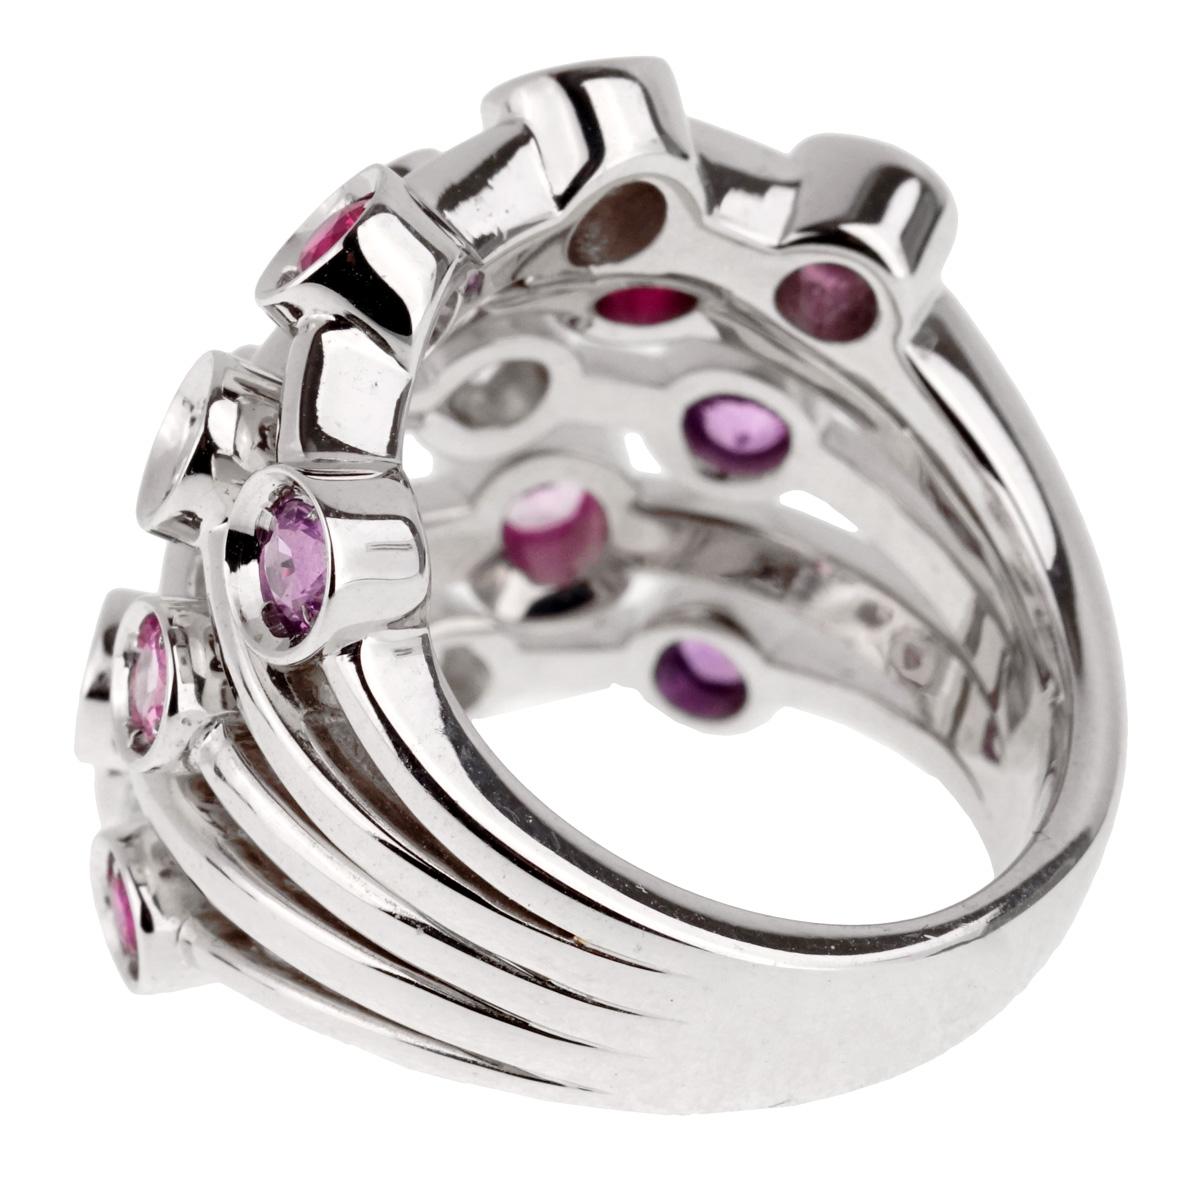 chanel sapphire ring